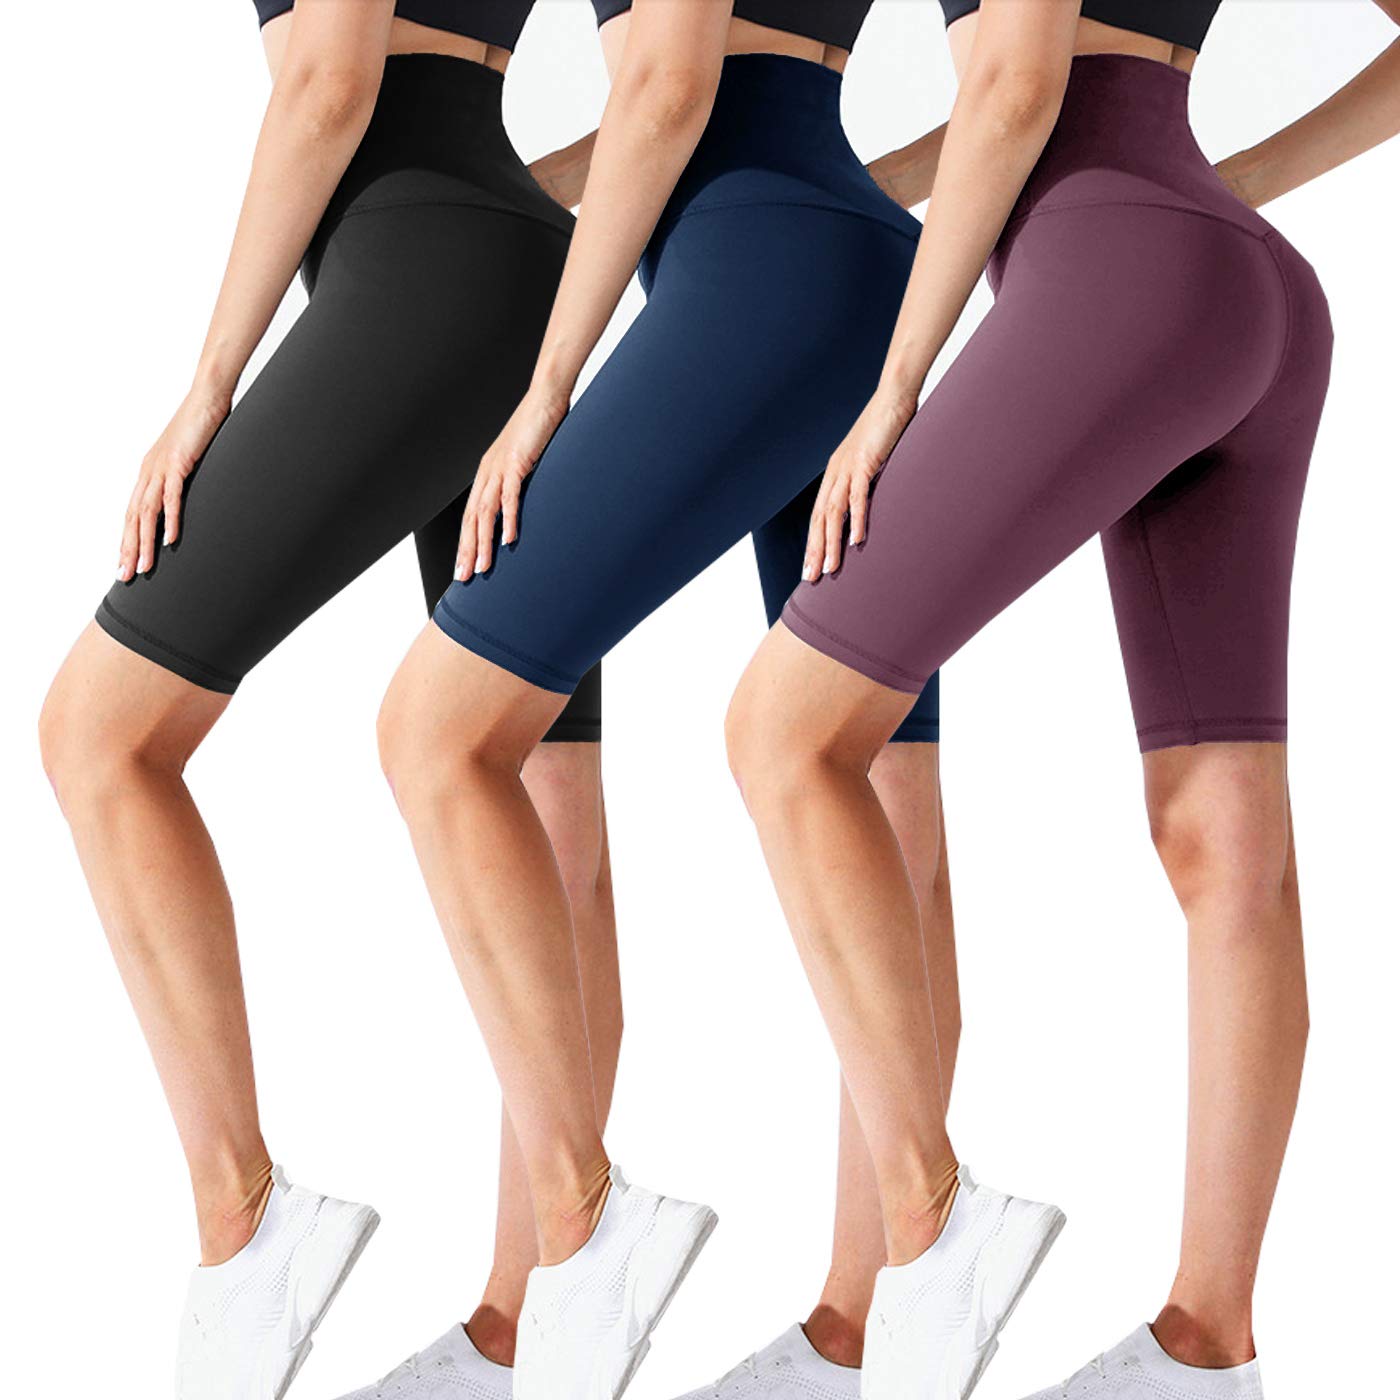 Fullsoft 3 Pack Biker Shorts Womens High Waisted Workout Running Athletic  Shorts Leggings - Black+Navy blue+Dark pink / S/M